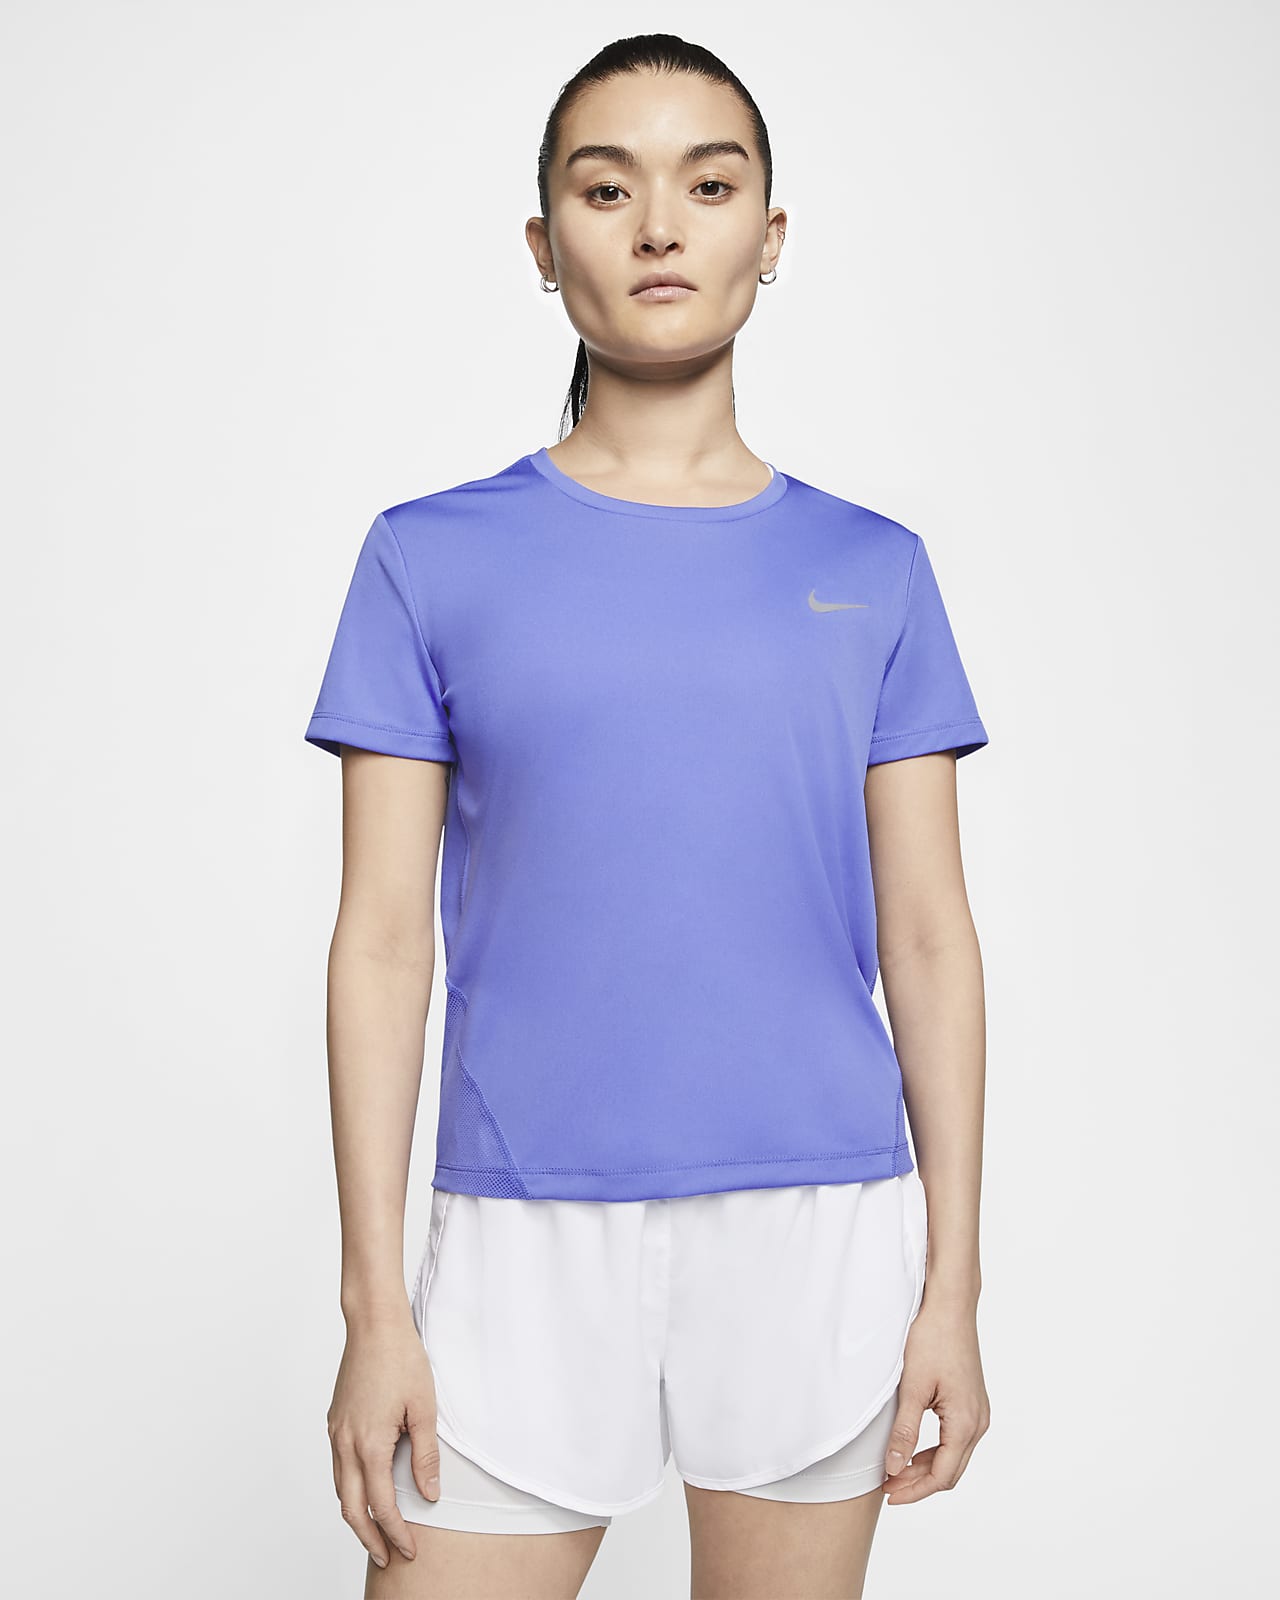 Permanentemente impactante provocar Nike Miler Women's Short-Sleeve Running Top. Nike JP